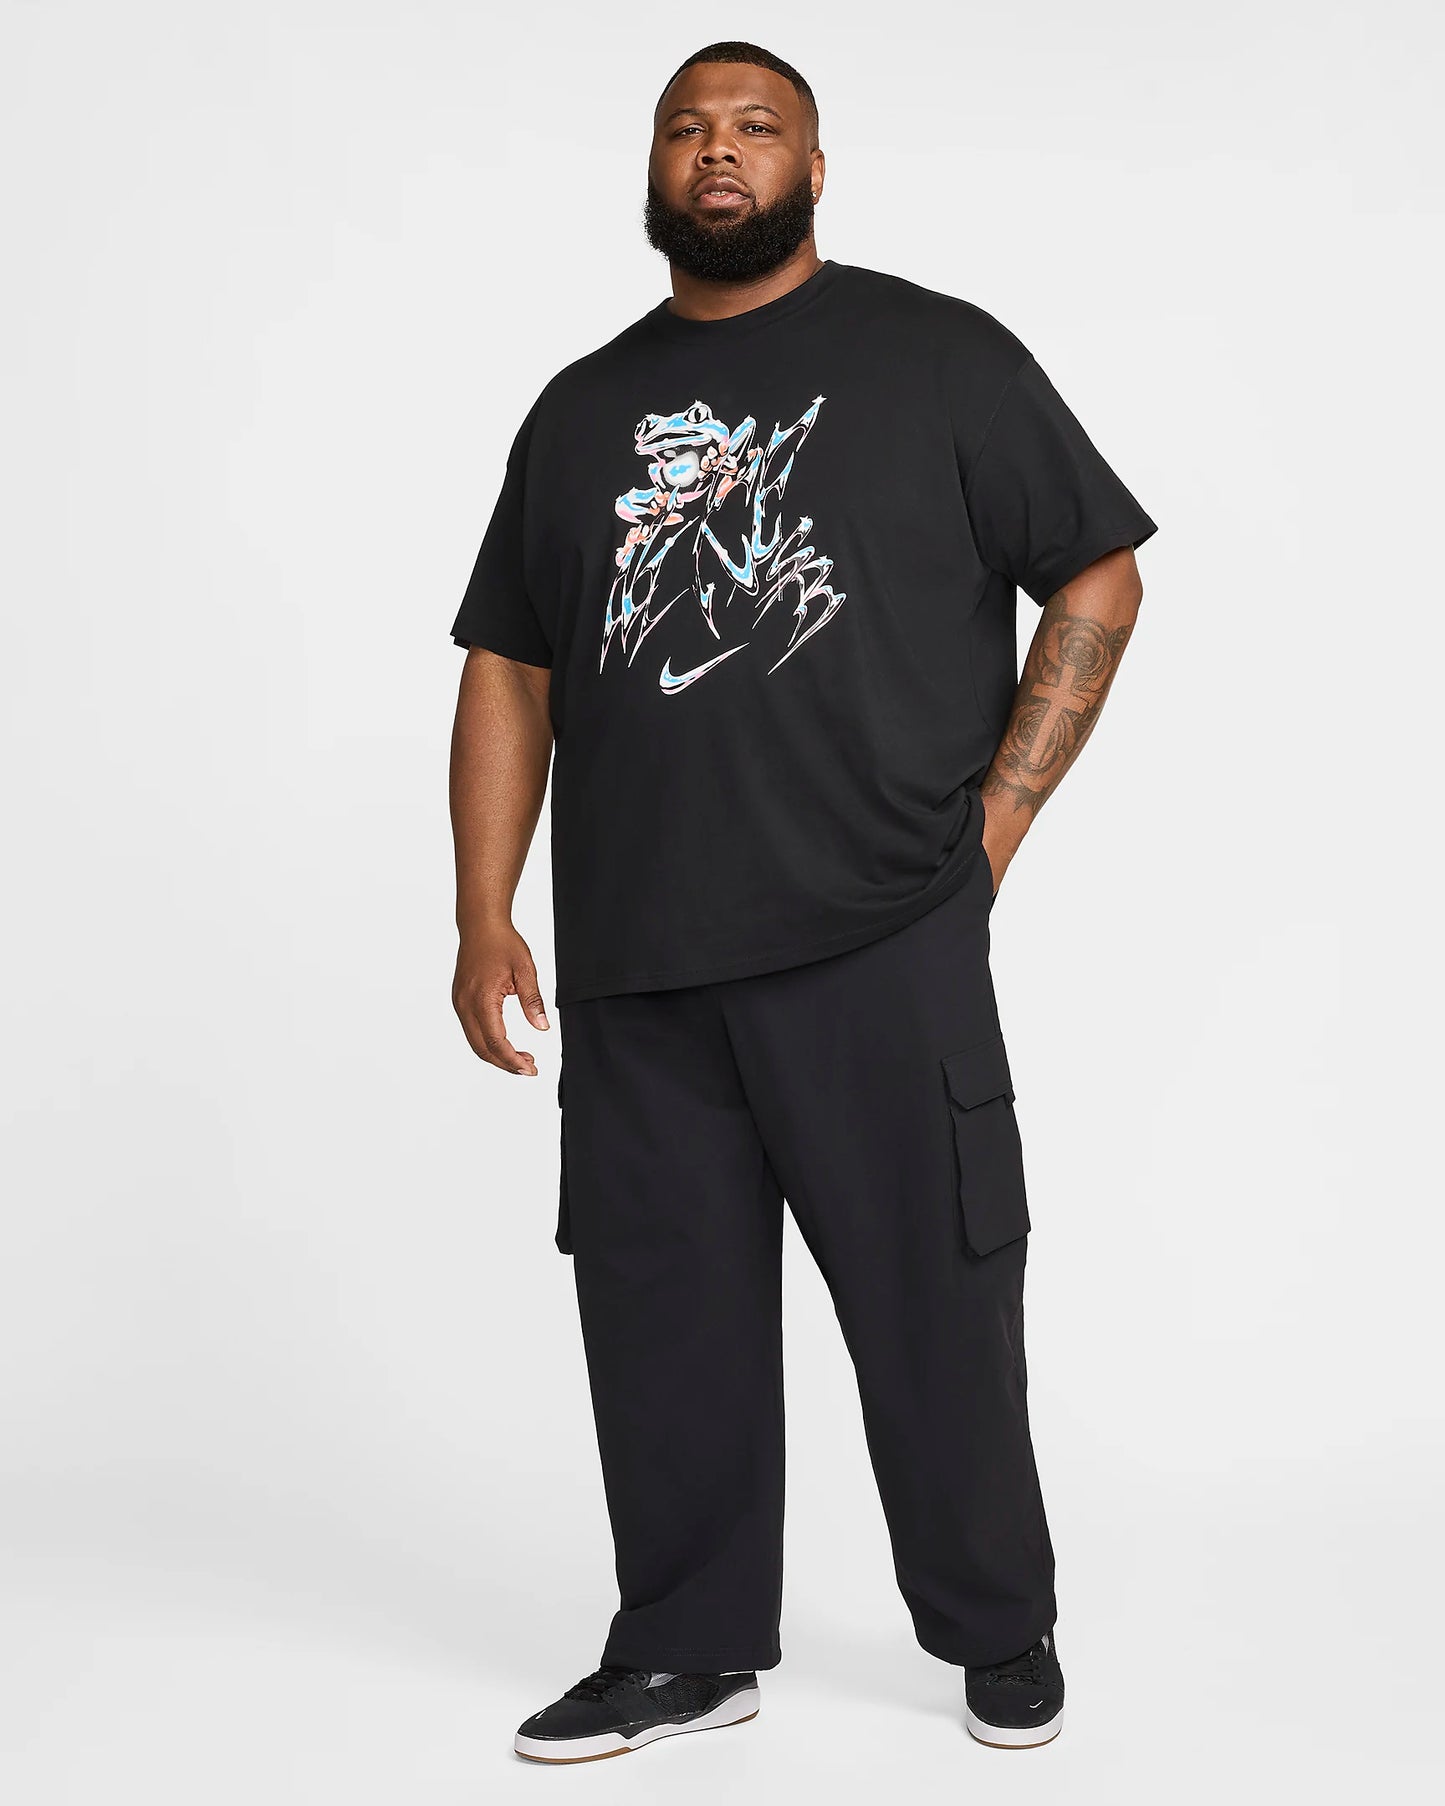 Nike SB Dri-Fit Kearny Skate Cargo Pants Black